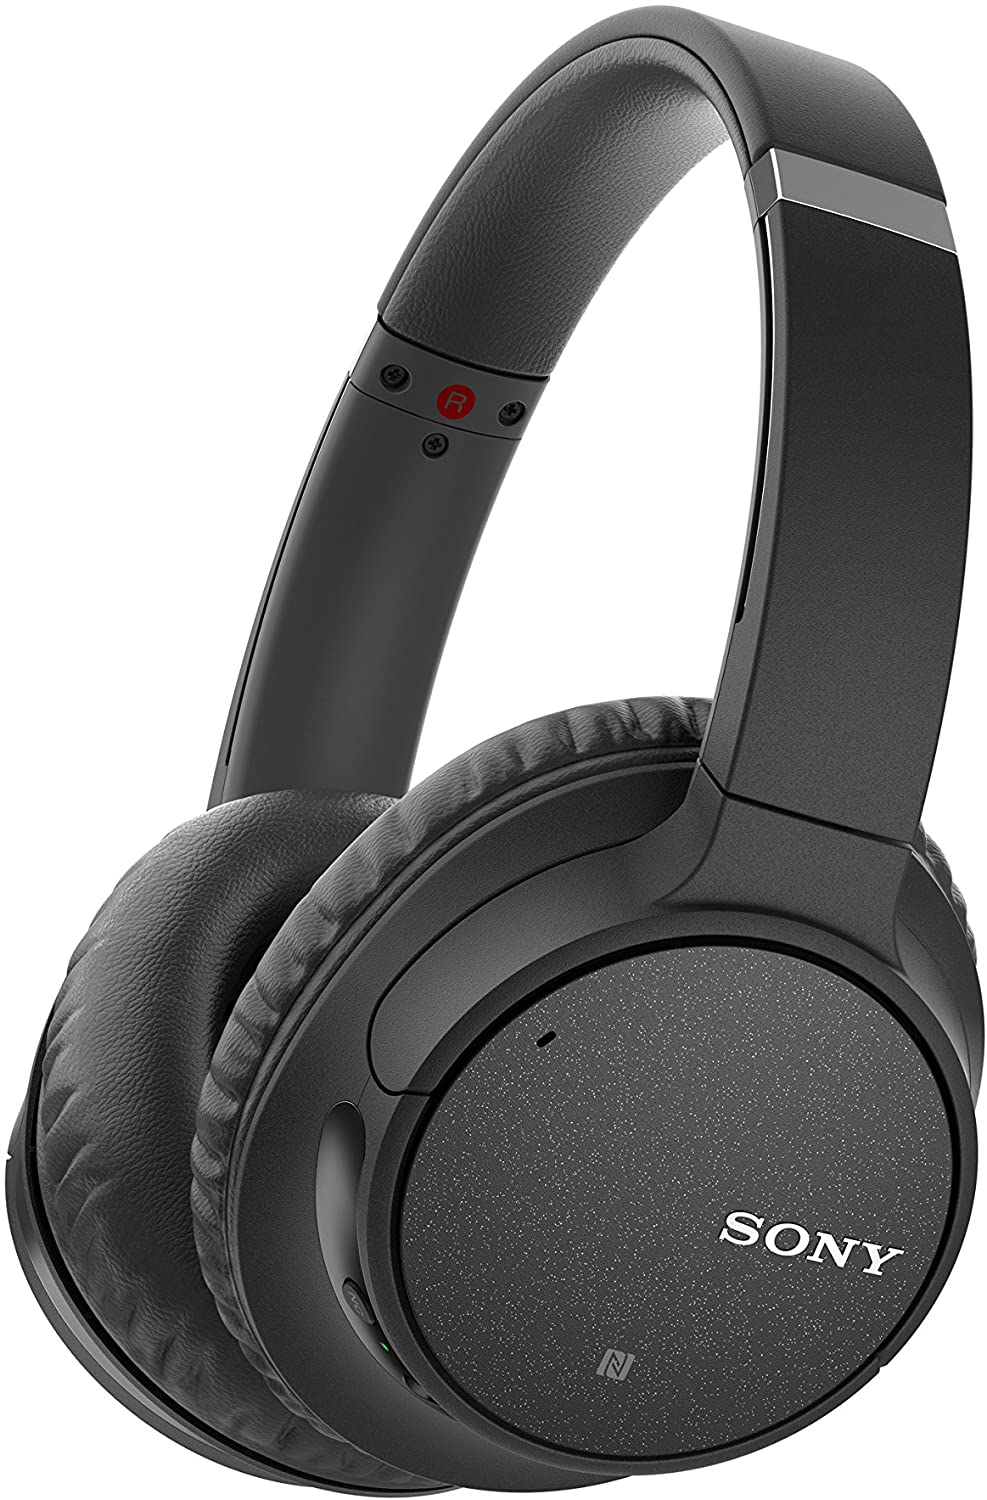 Save $70 on Sony Black Over-Ear Wireless Noise Canceling Headphones